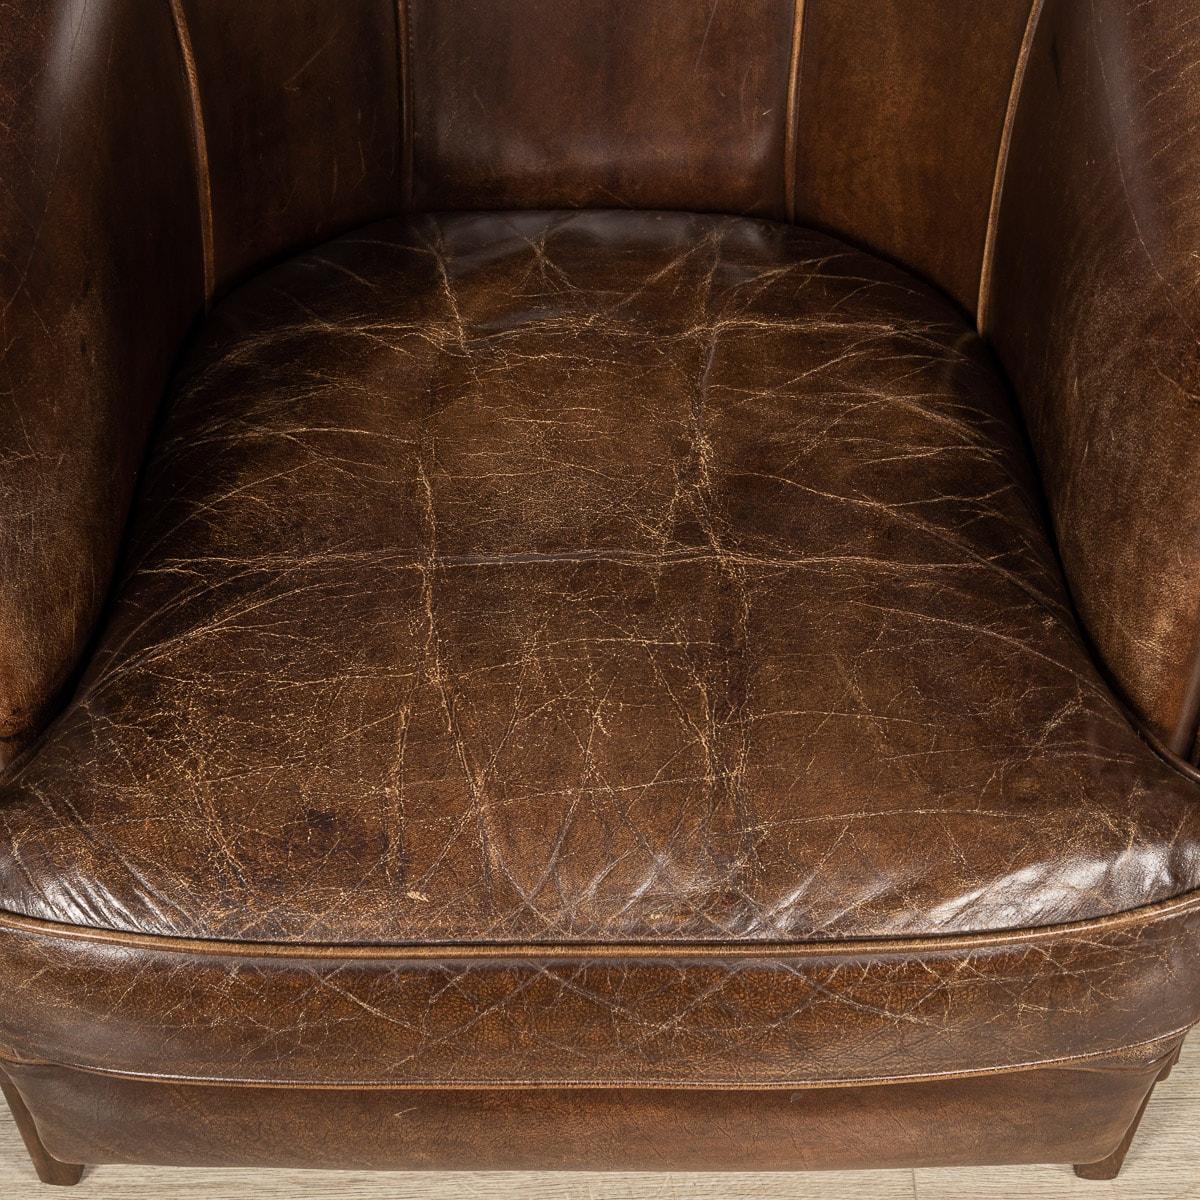 20th Century Dutch Sheepskin Leather Tub Chairs 3